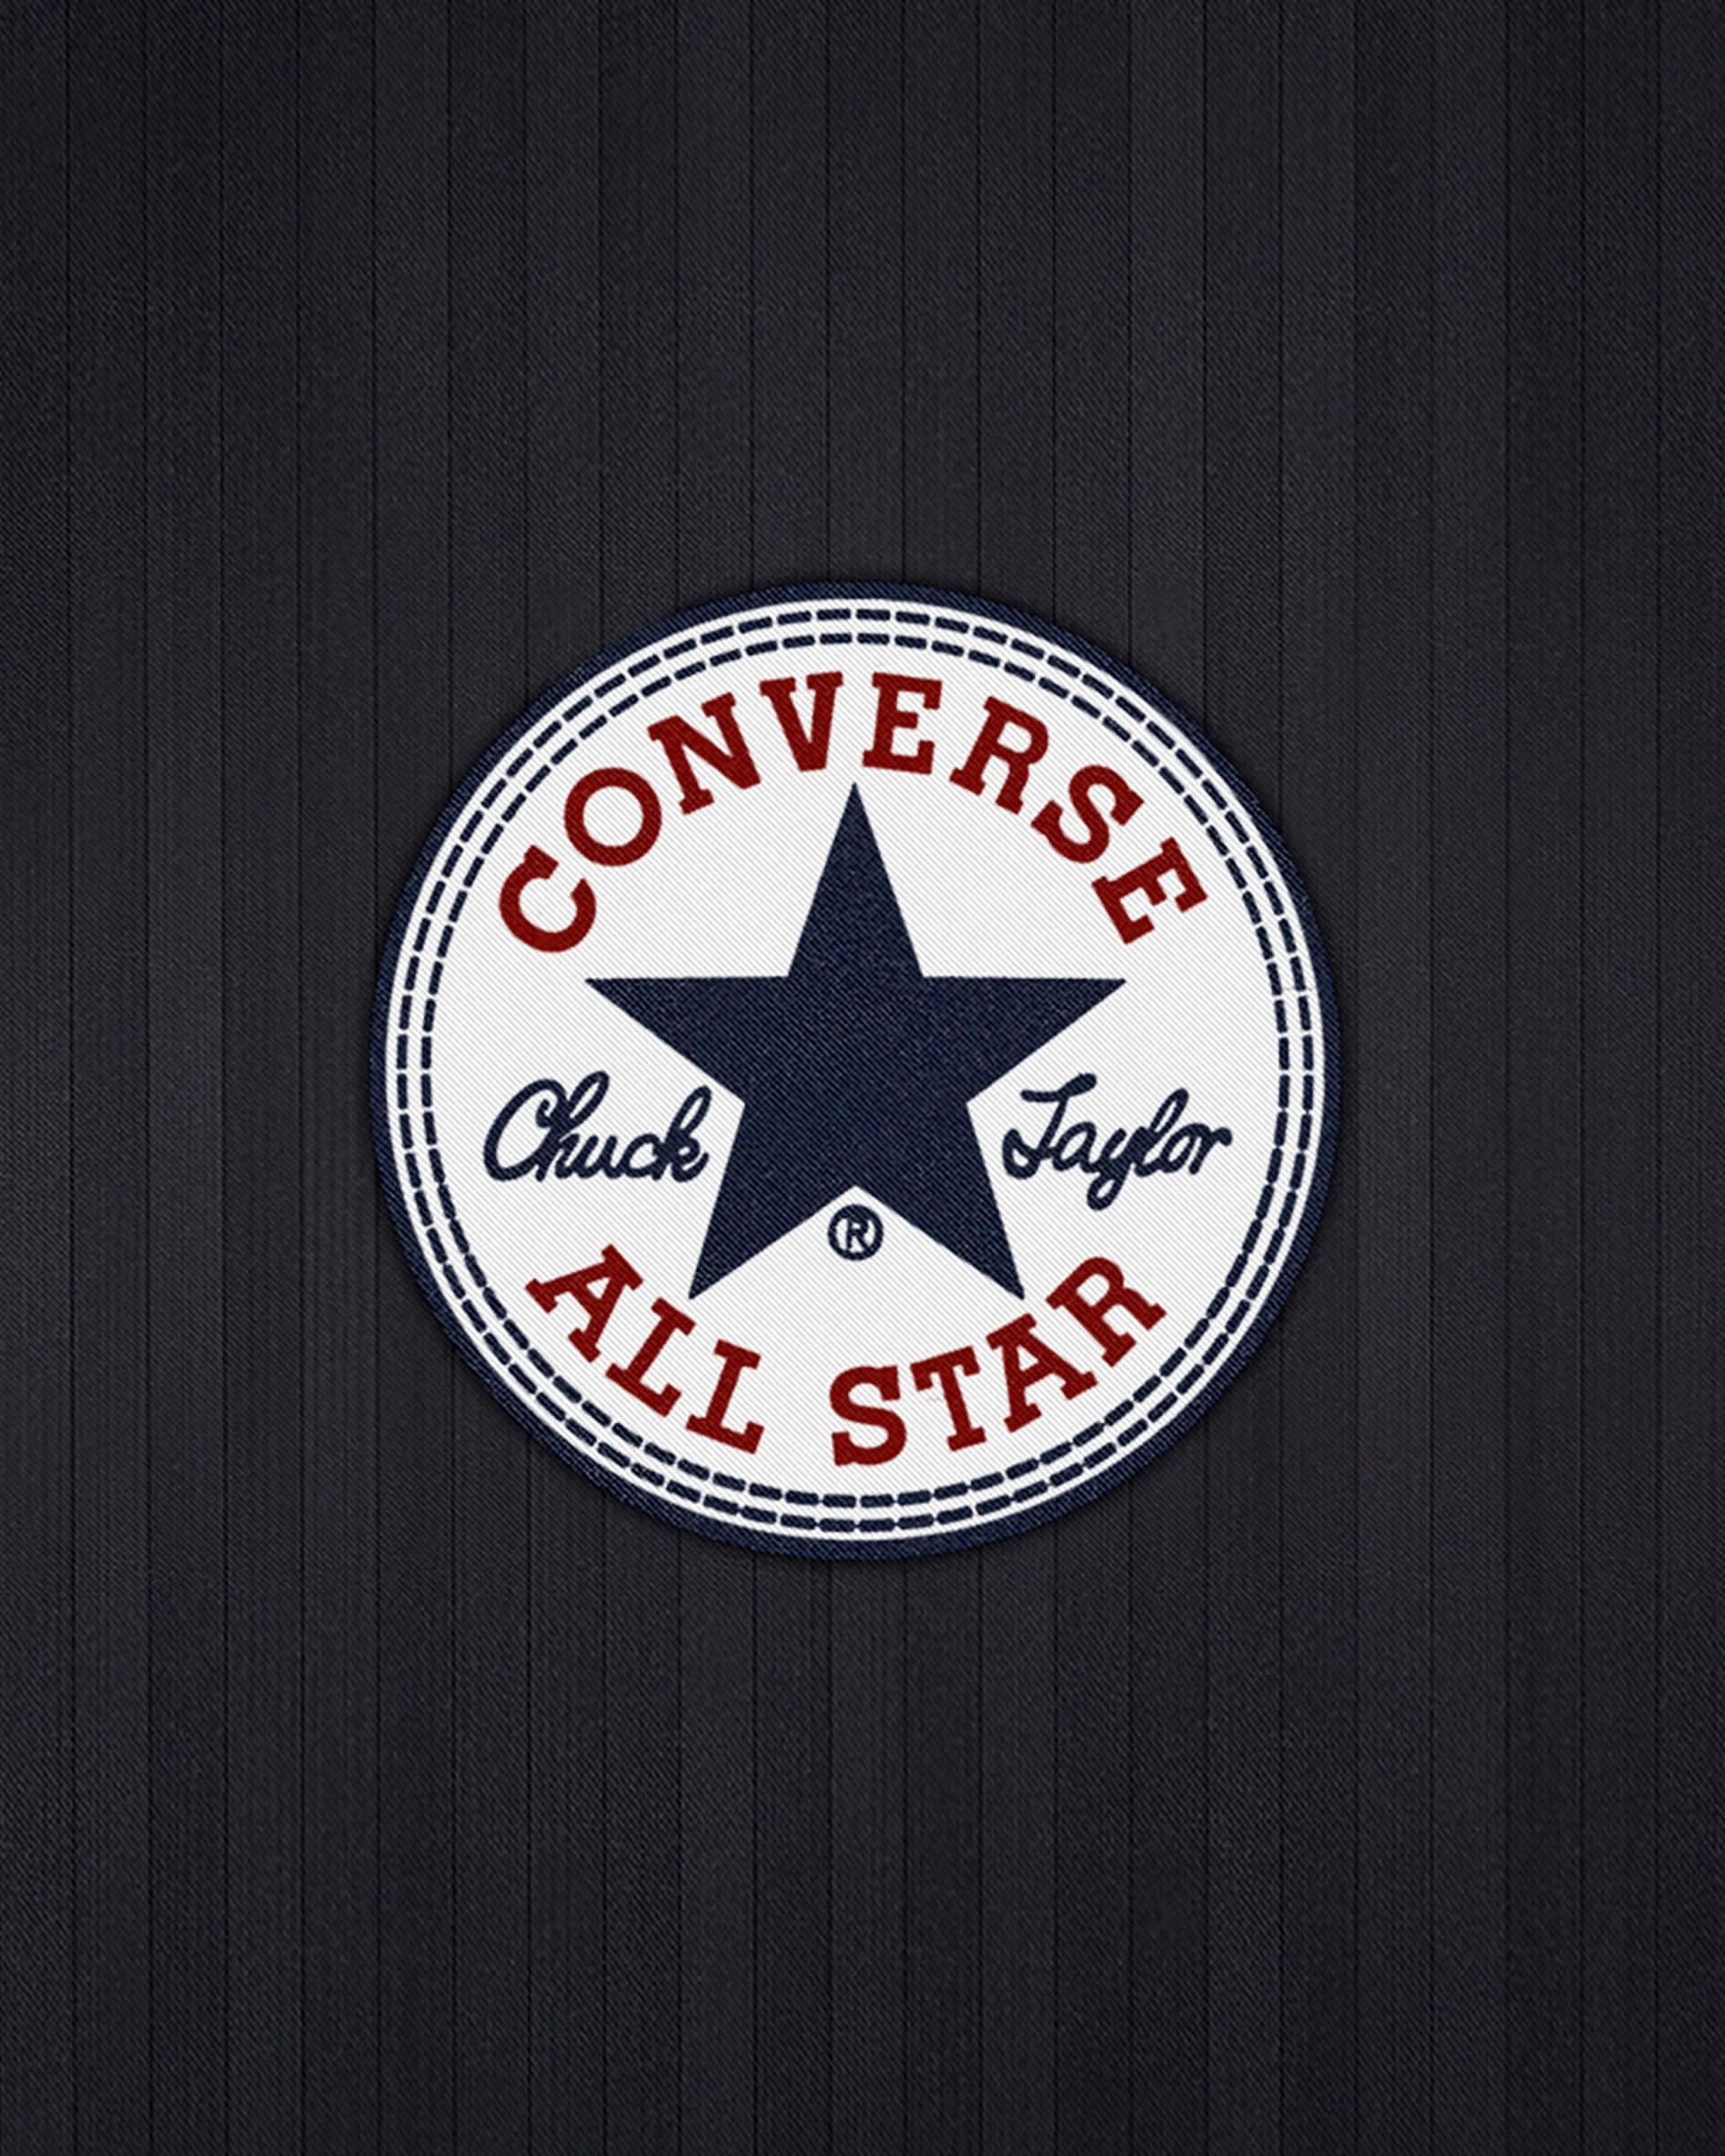 Converse All Star Wallpaper for Google Nexus 7